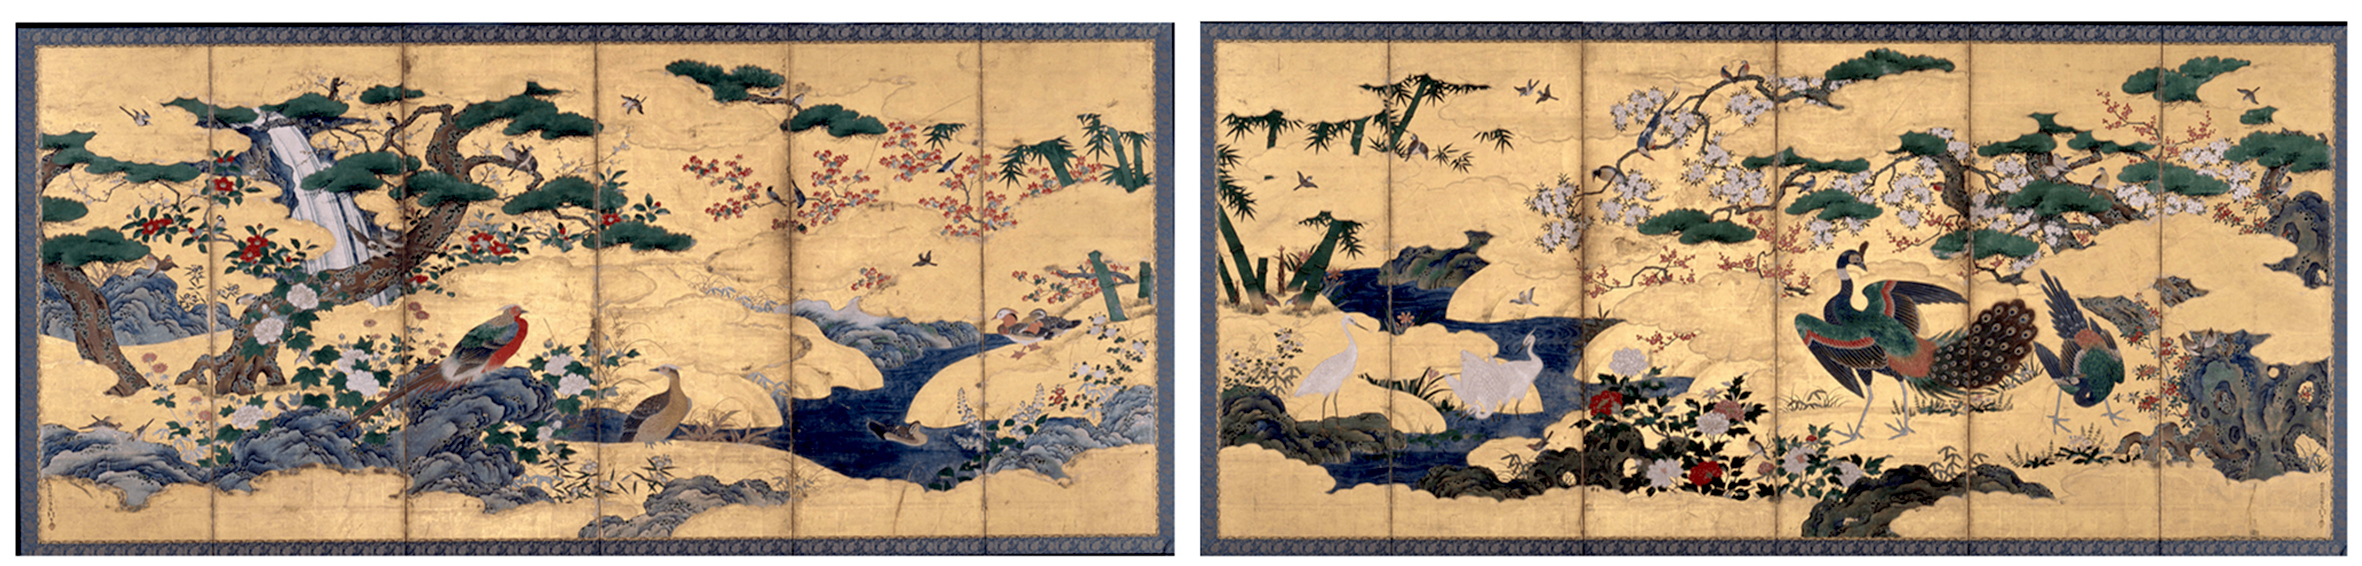 Kano Motonobu, Birds and Flowers of the Four Seasons, 16th century, pair of folding screens, ink, color, and gold on paper, 162.4 × 360.2 cm each (Hakutsuru Fine Art Museum, Kobe)